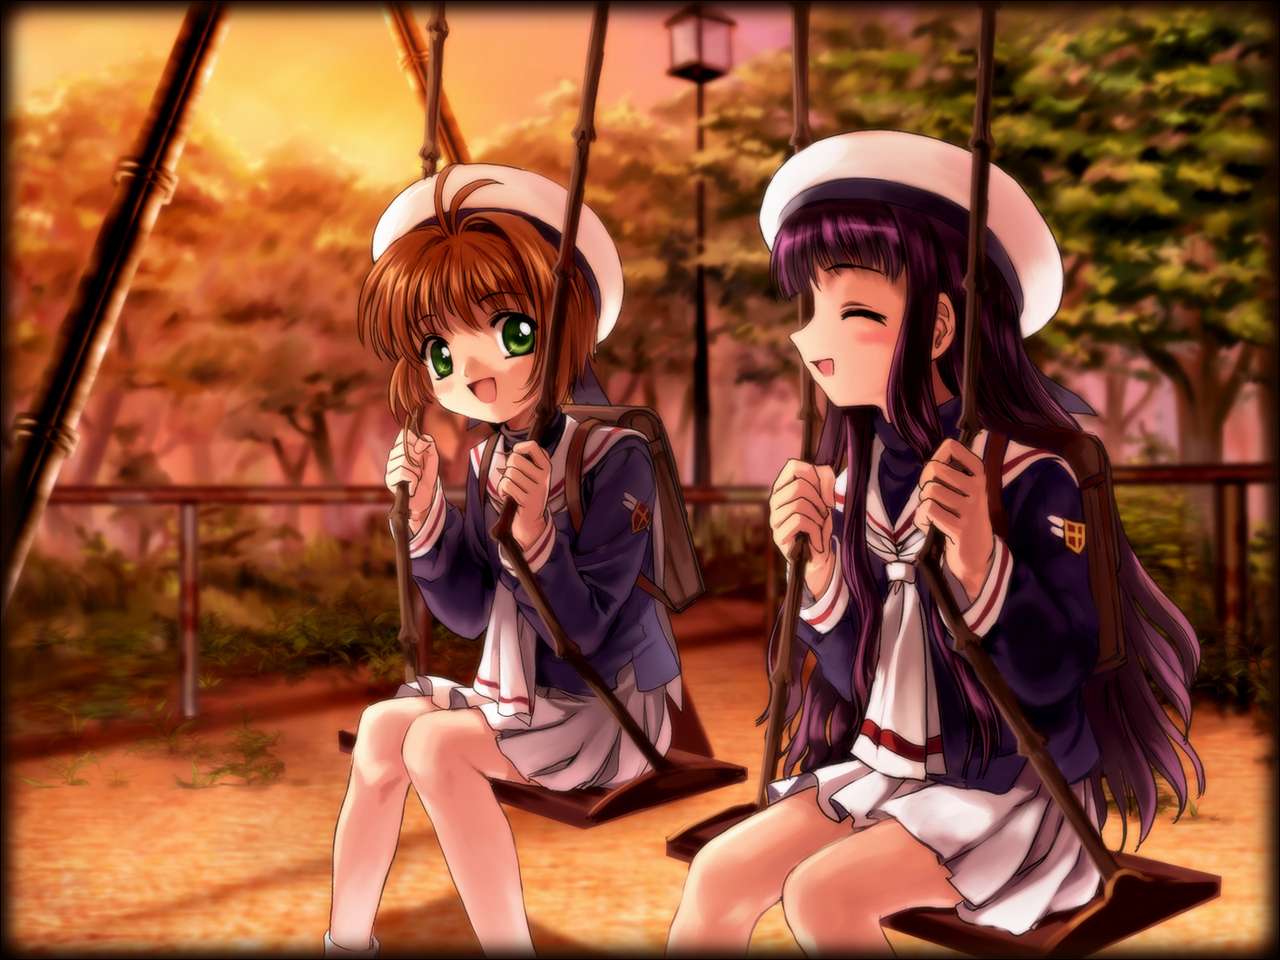 Sakura and Tomoyo. puzzle online from photo